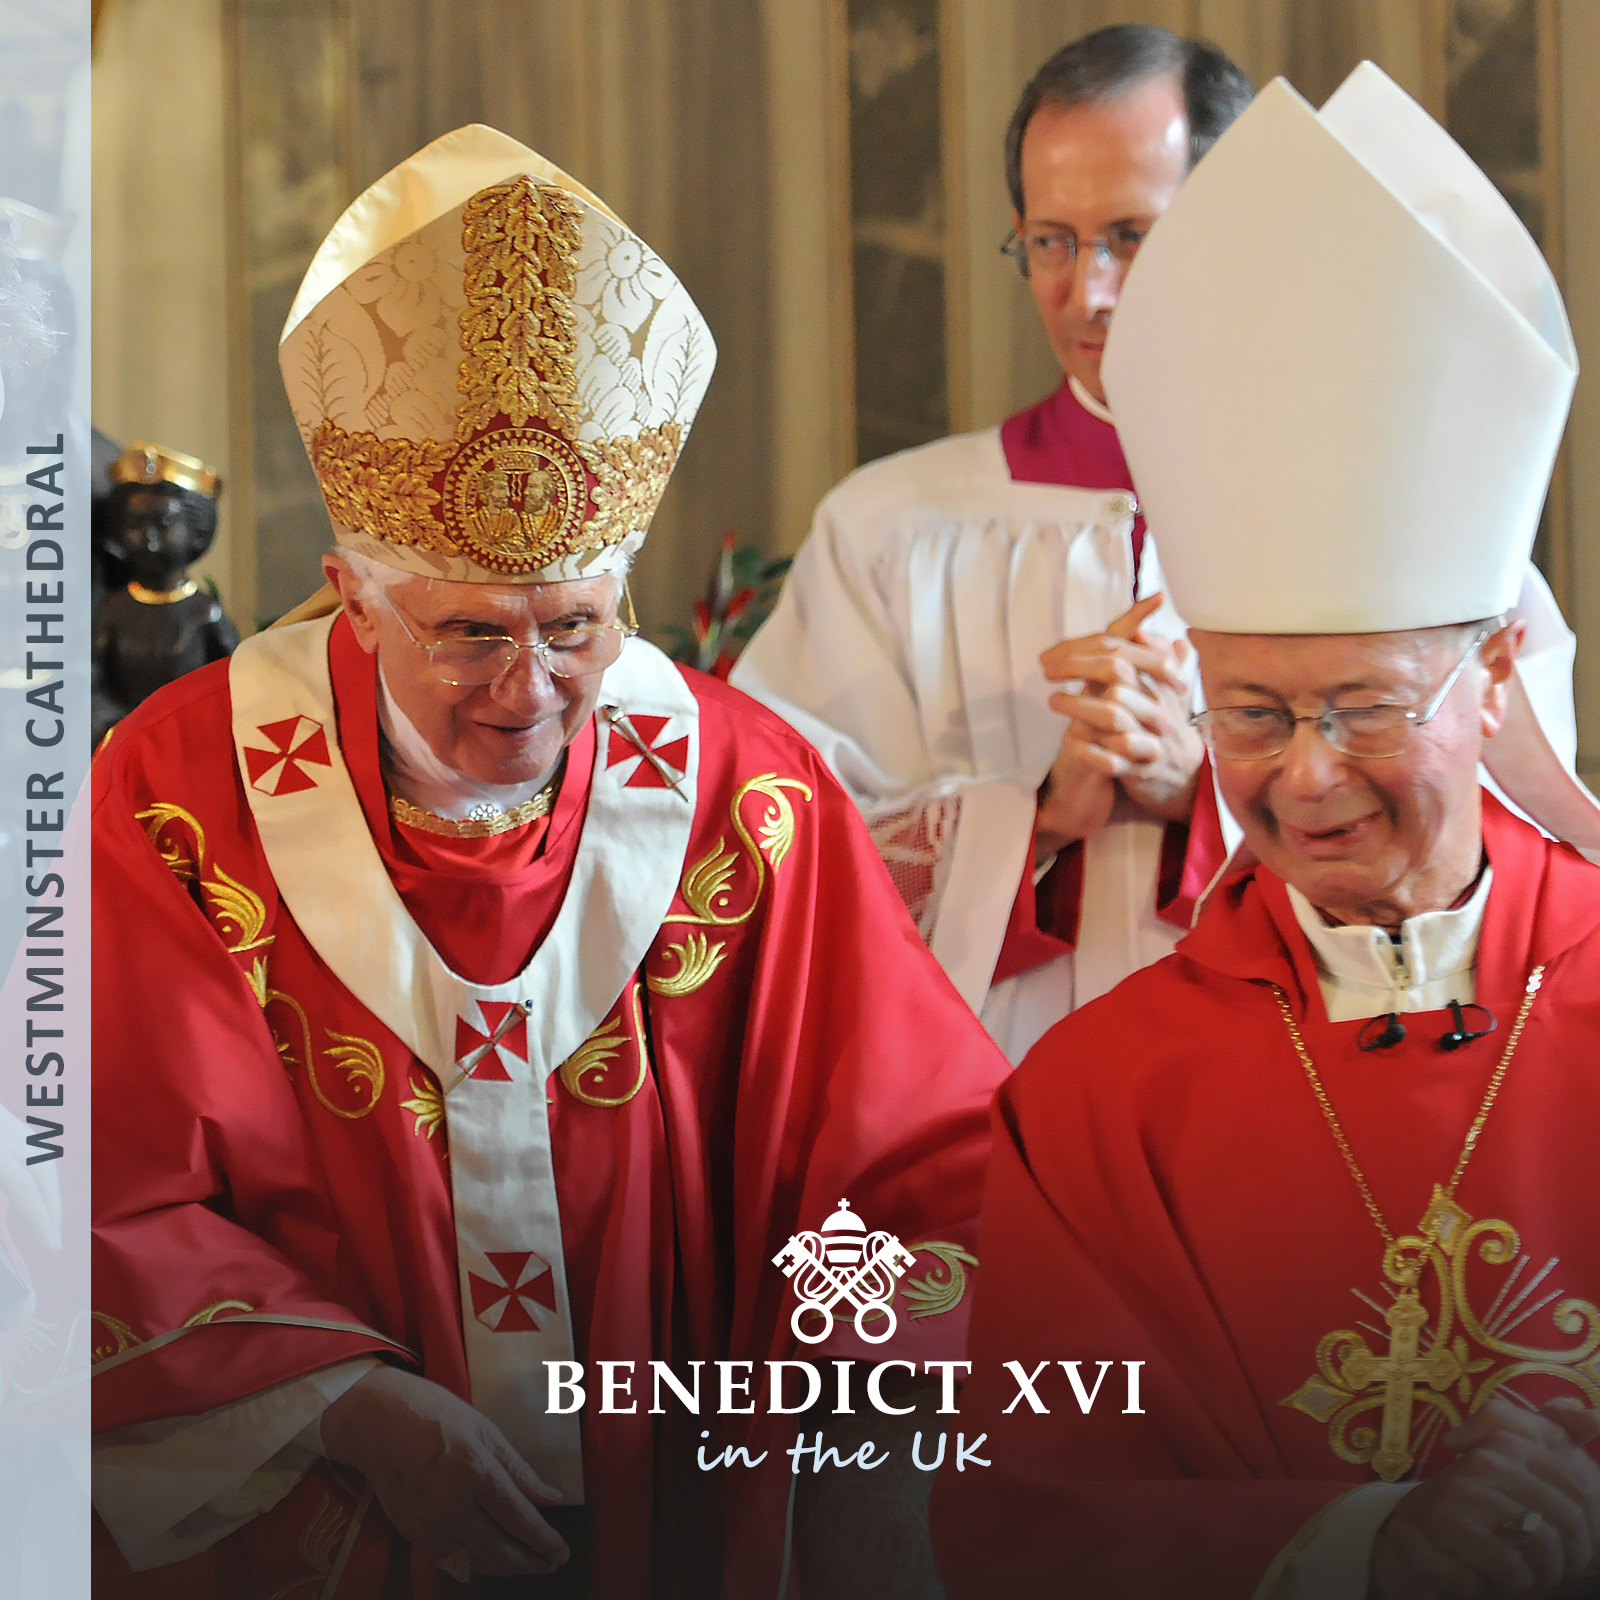  Bishop Regan greets Benedict XVI on behalf of the people of Wales 